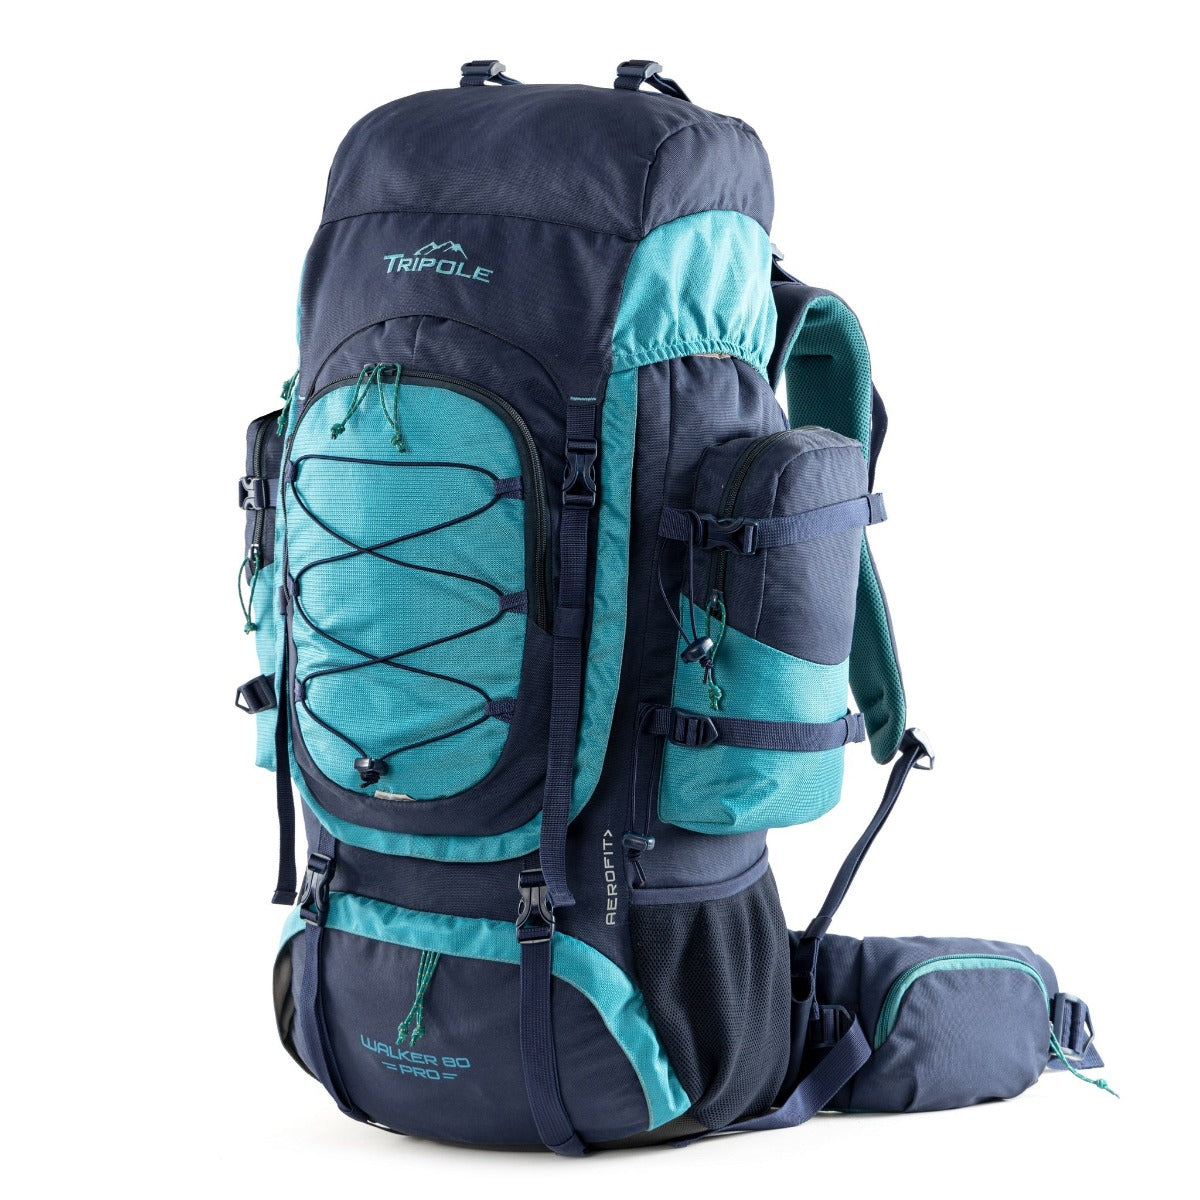 Walker Pro Trekking and Hiking Rucksack - 80 Litre - Blue 1